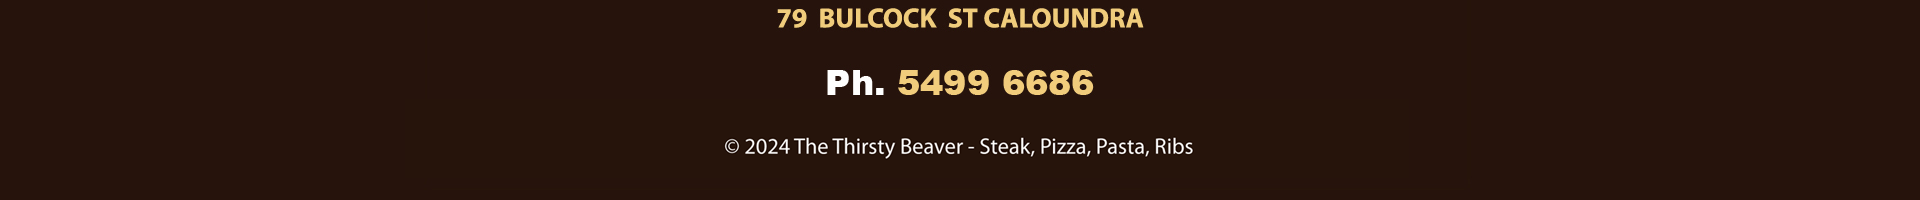 The Thirsty Beaver - Steak, Pizza, Pasta, Ribs